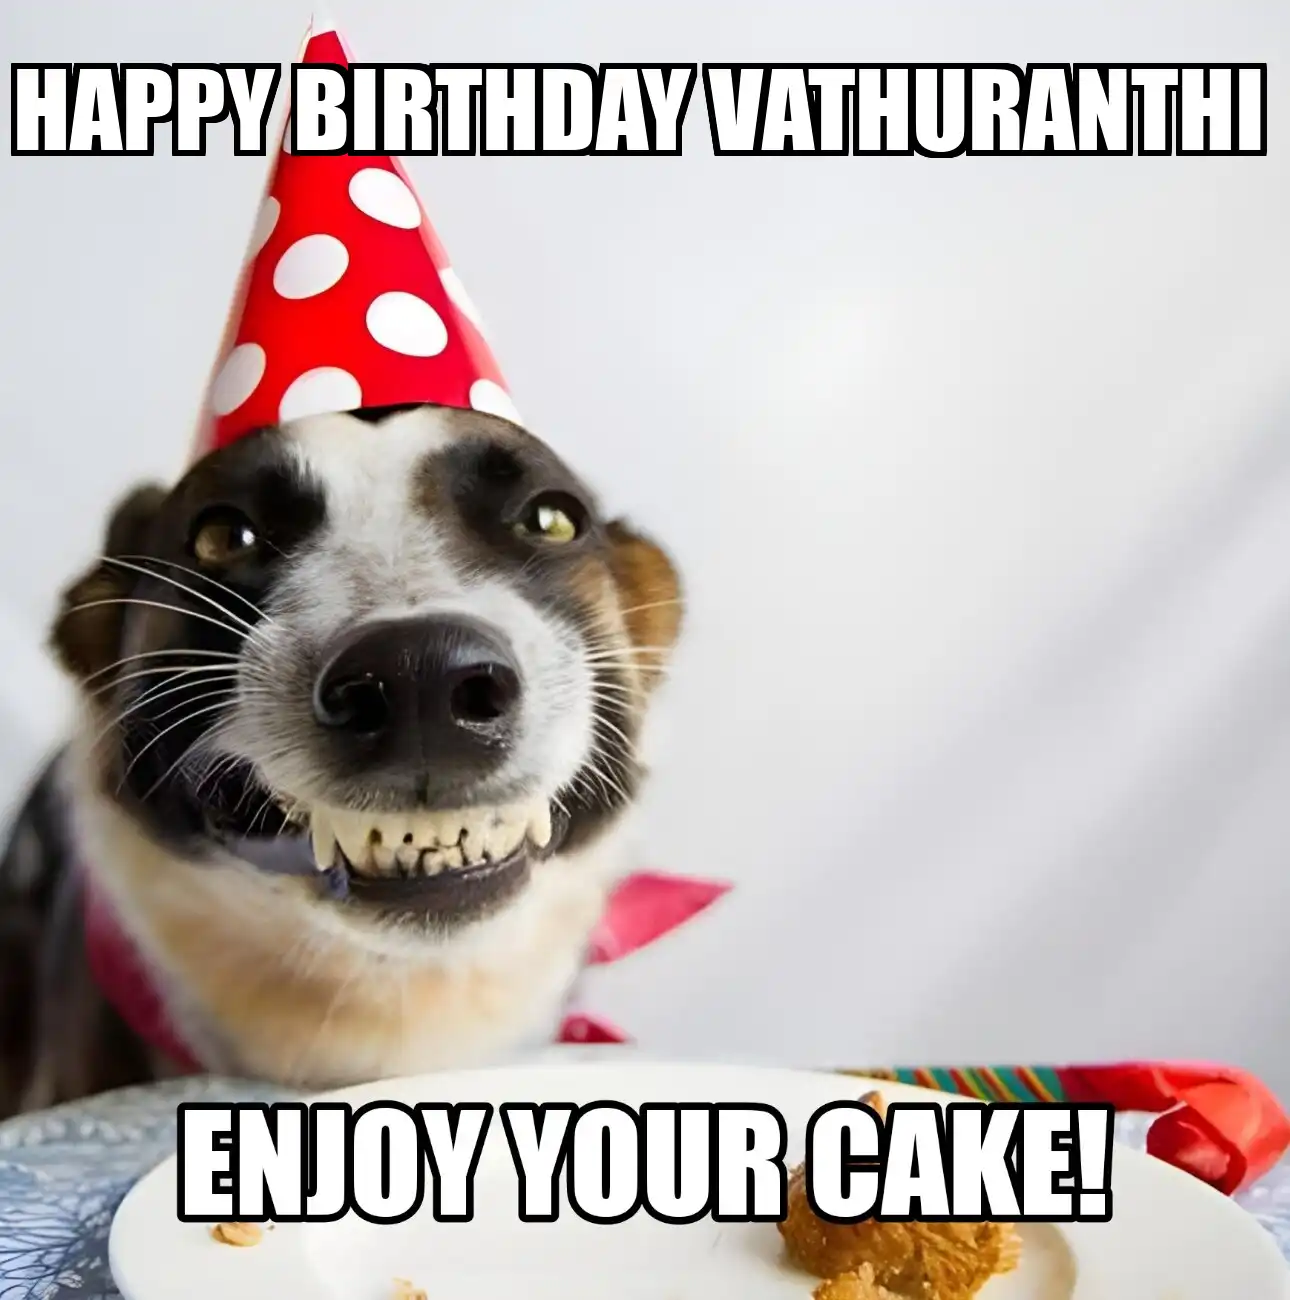 Happy Birthday Vathuranthi Enjoy Your Cake Dog Meme